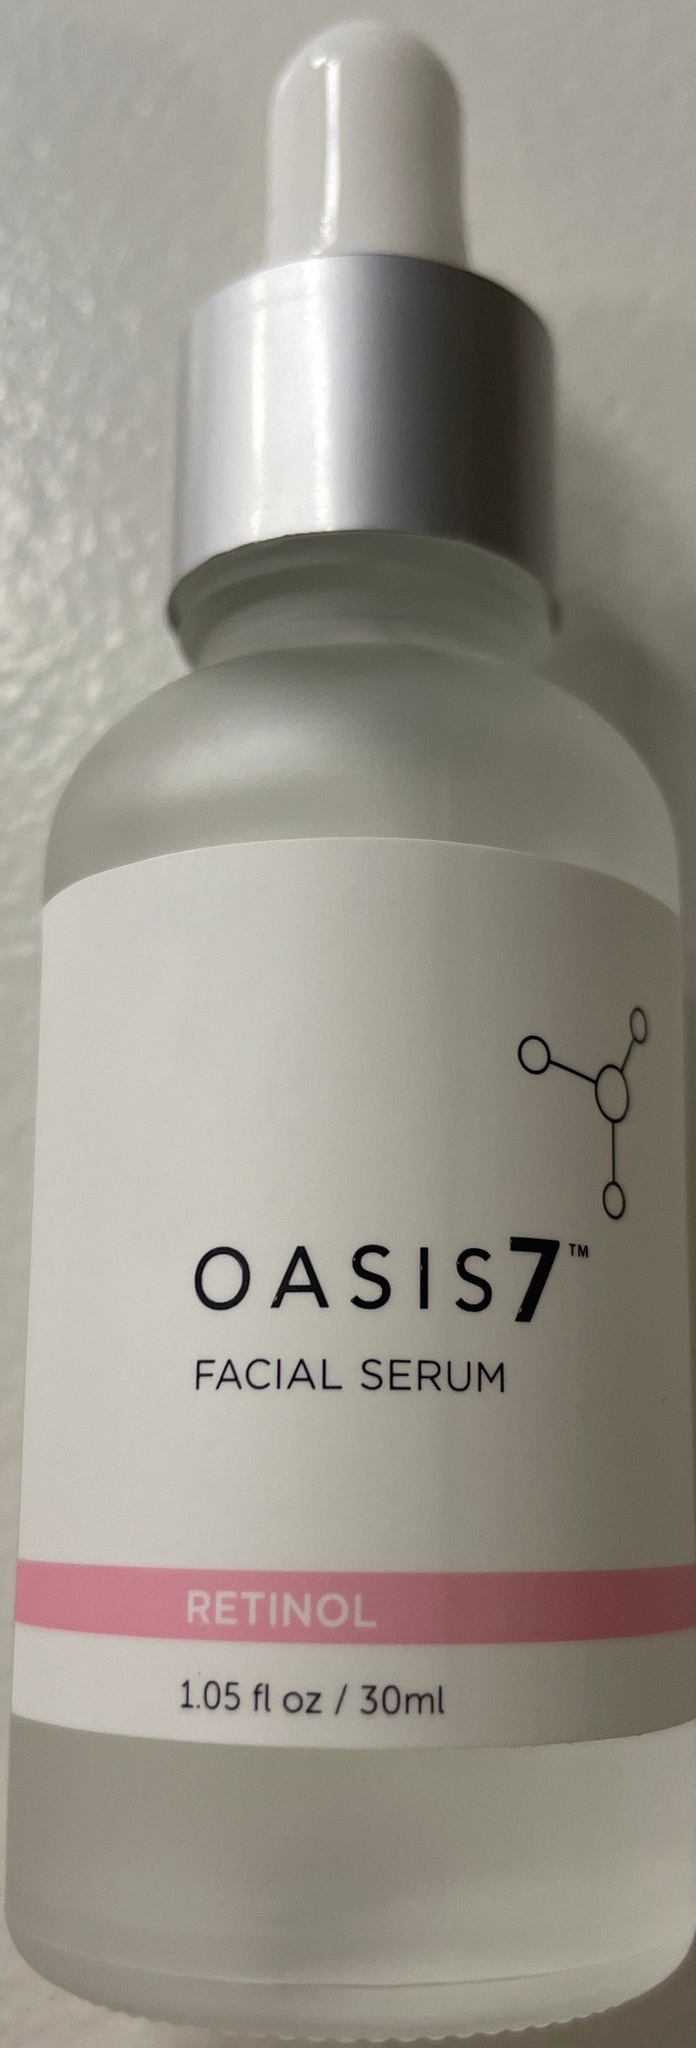 Oasis 7 Retinol Facial Serum